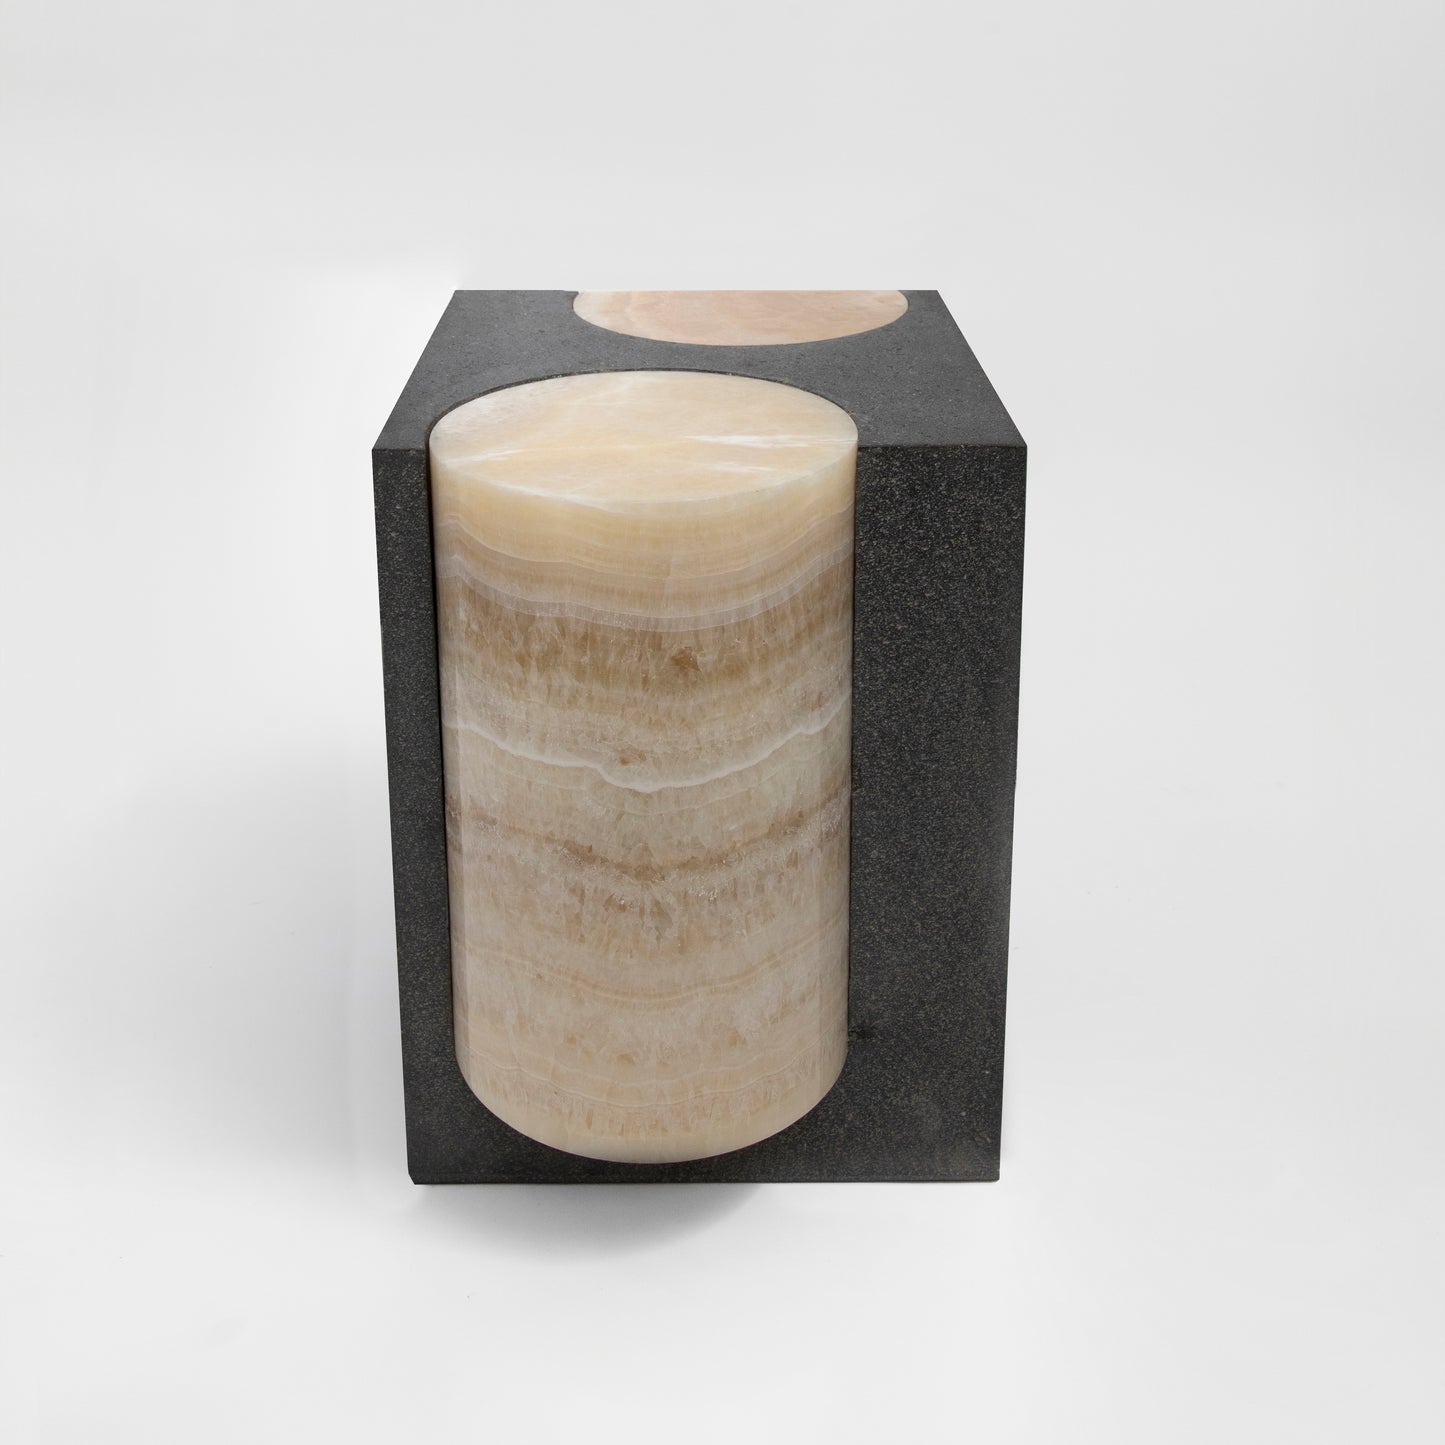 Bespoke Black Lava Stone & Warm Onyx Graphic Modern Rectangular Sidetable/Stool